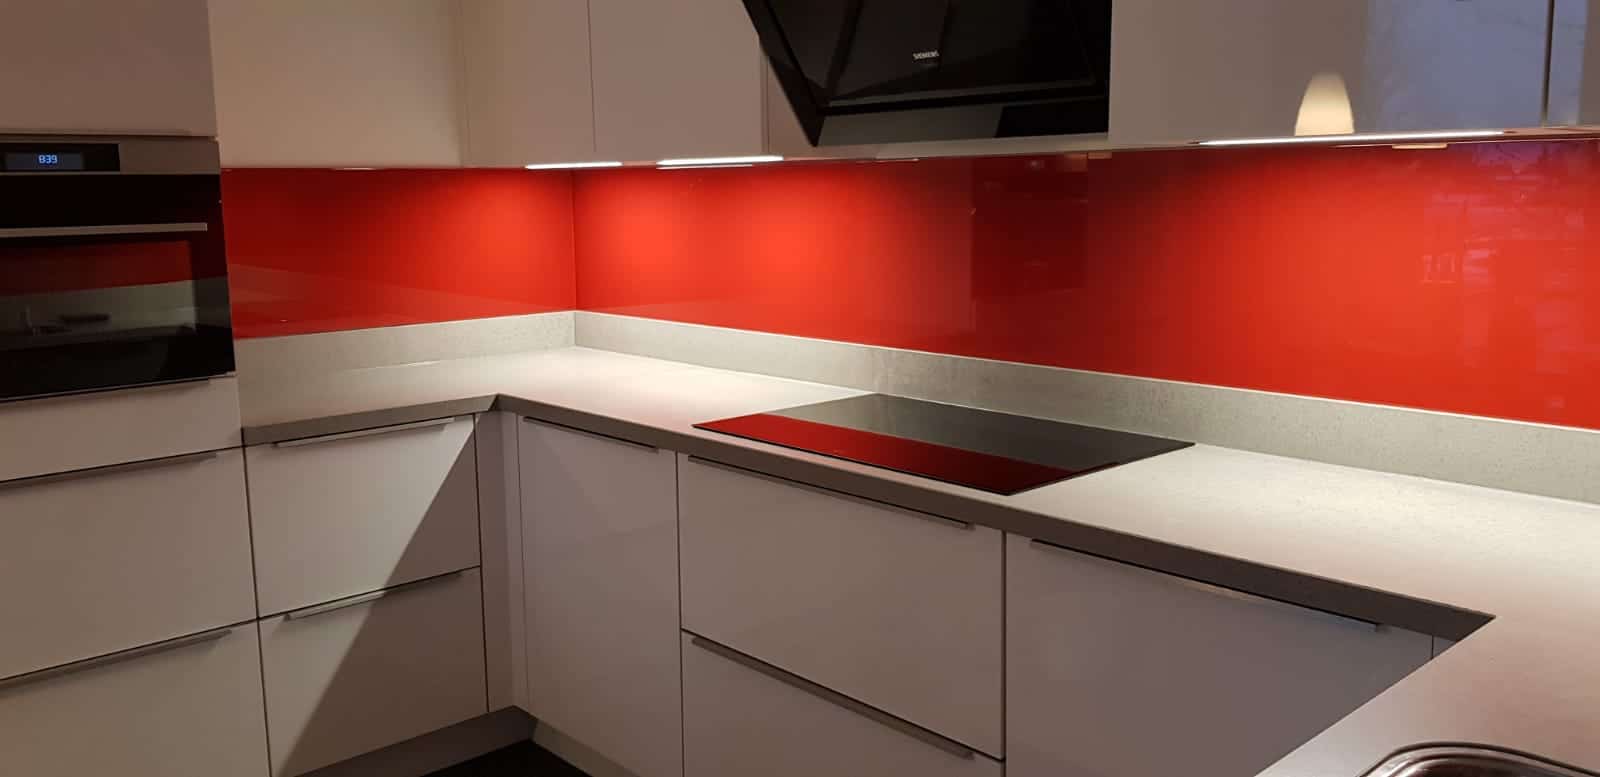 Keuken achterwand glas met rode print